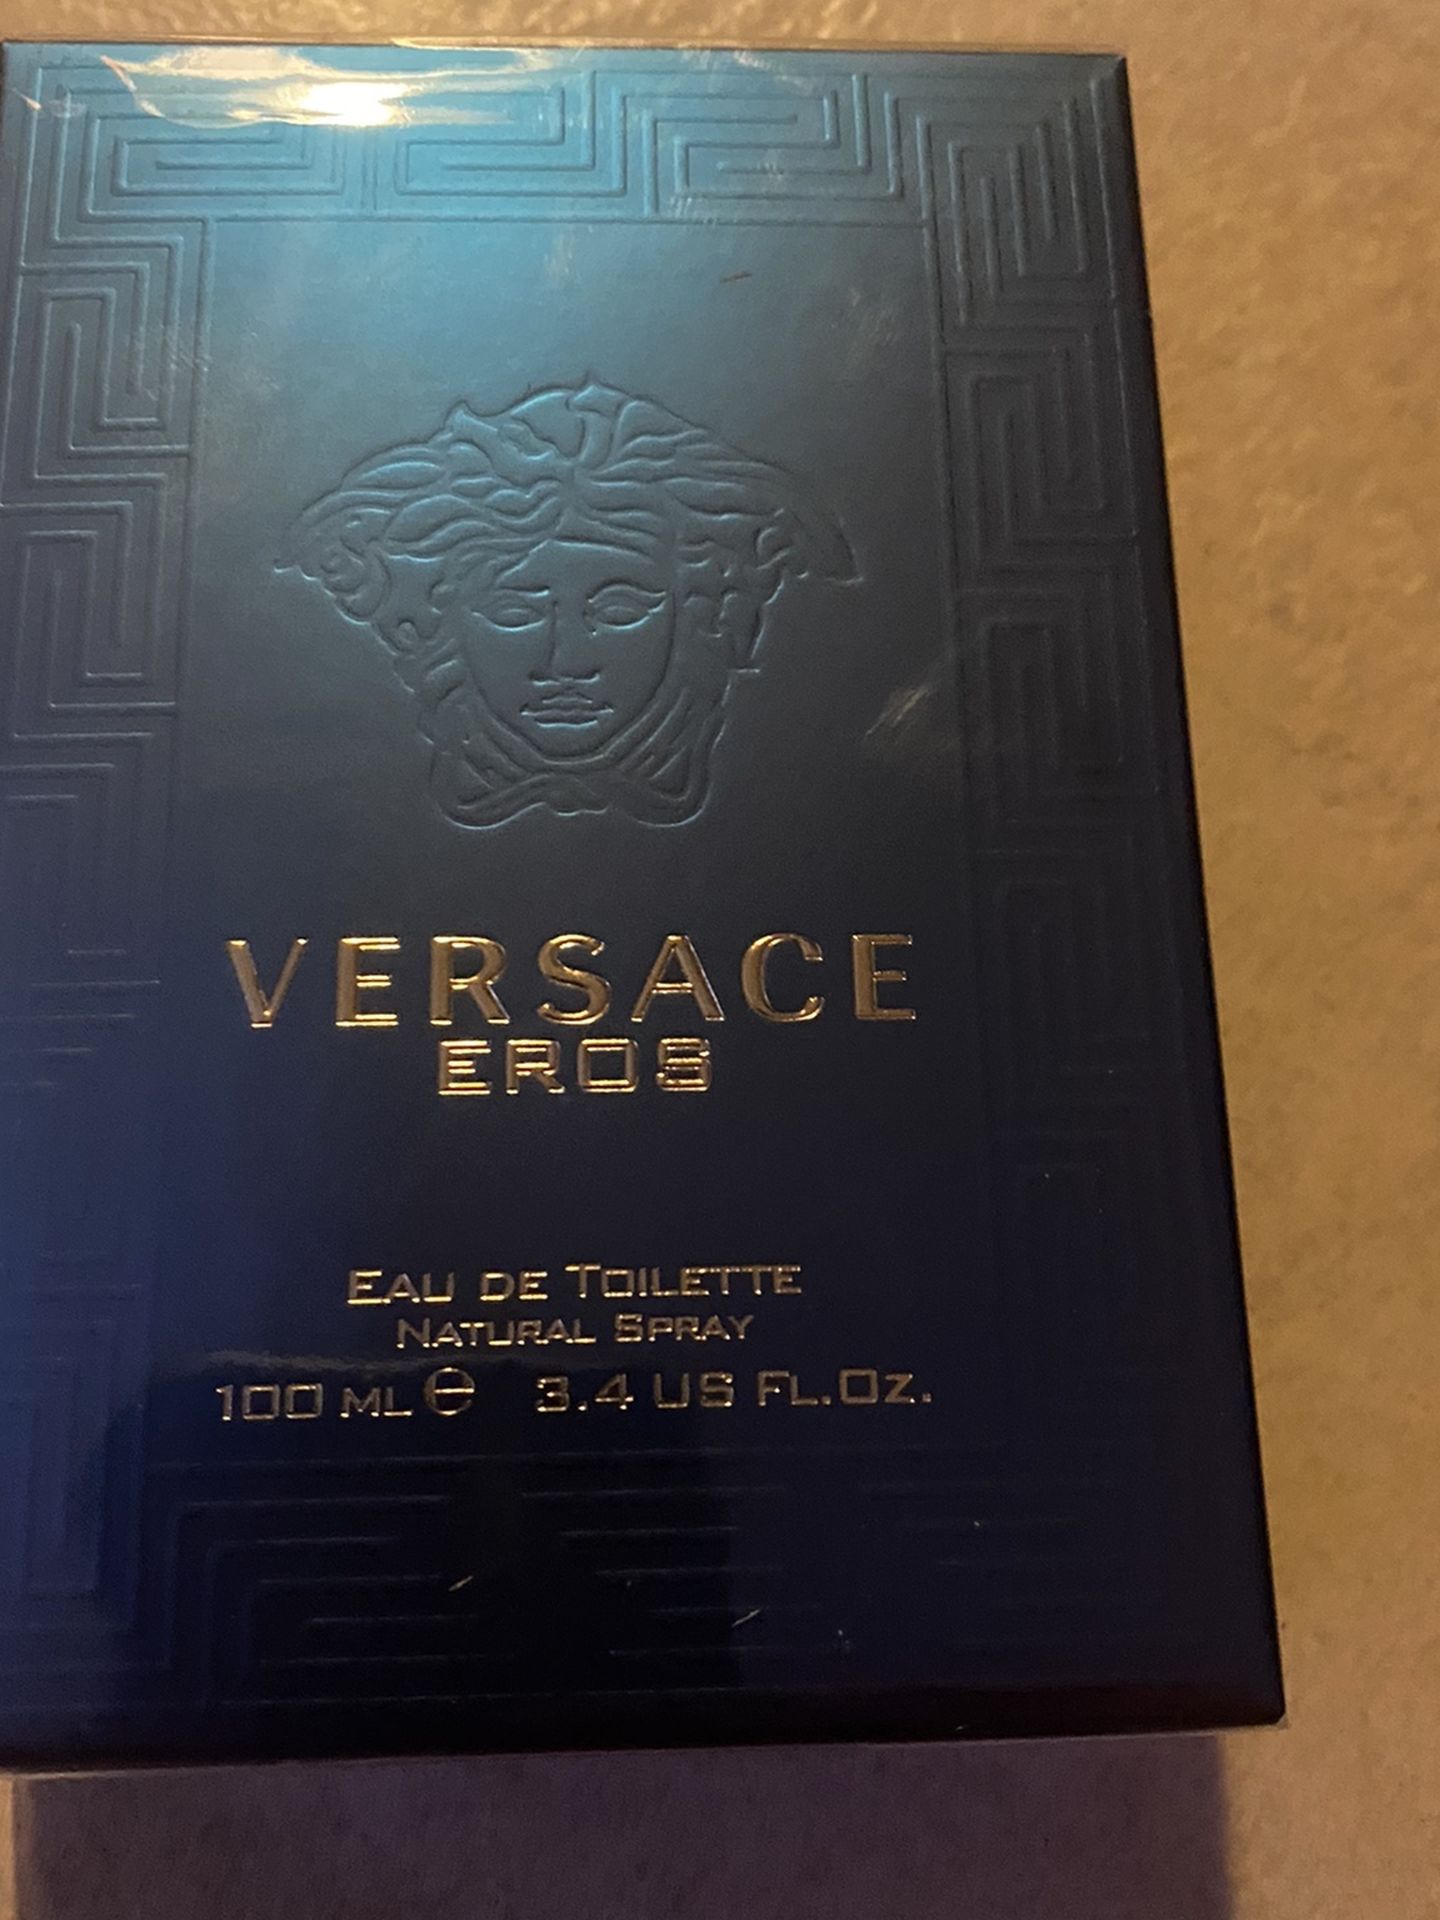 Versace Eros